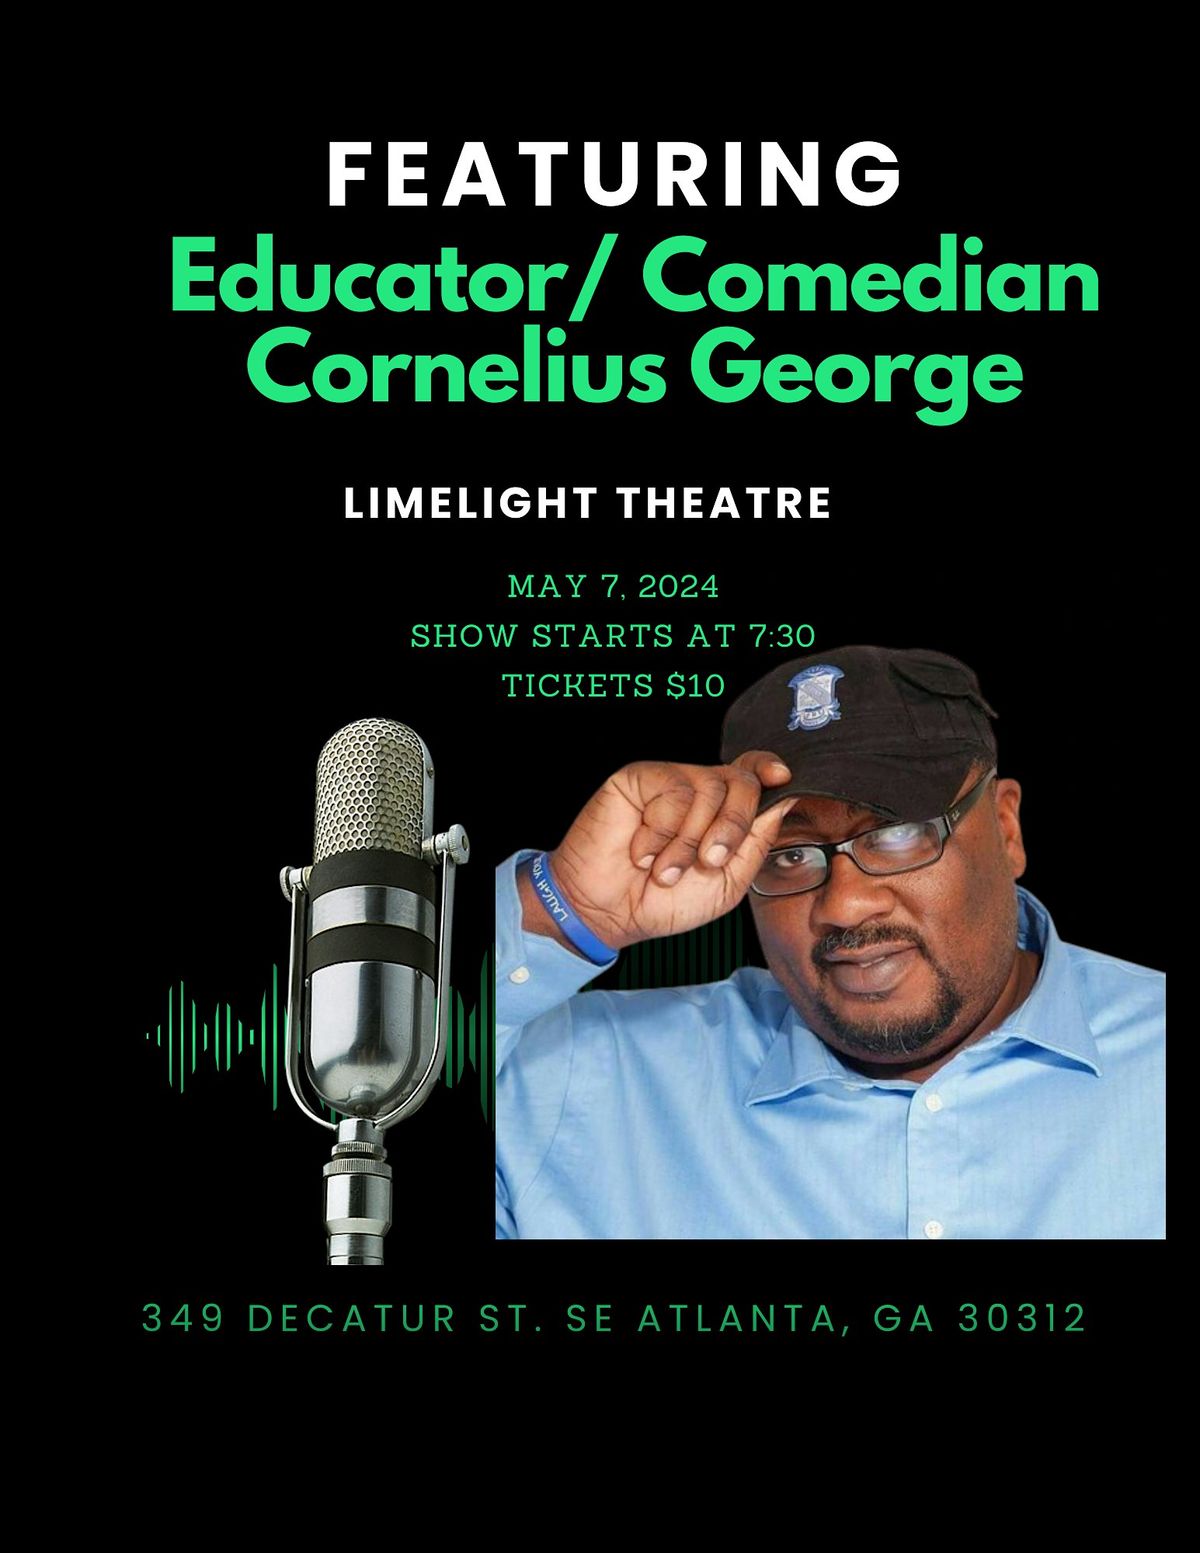 Educator\/Comedian Cornelius George featuring on Decatur St.